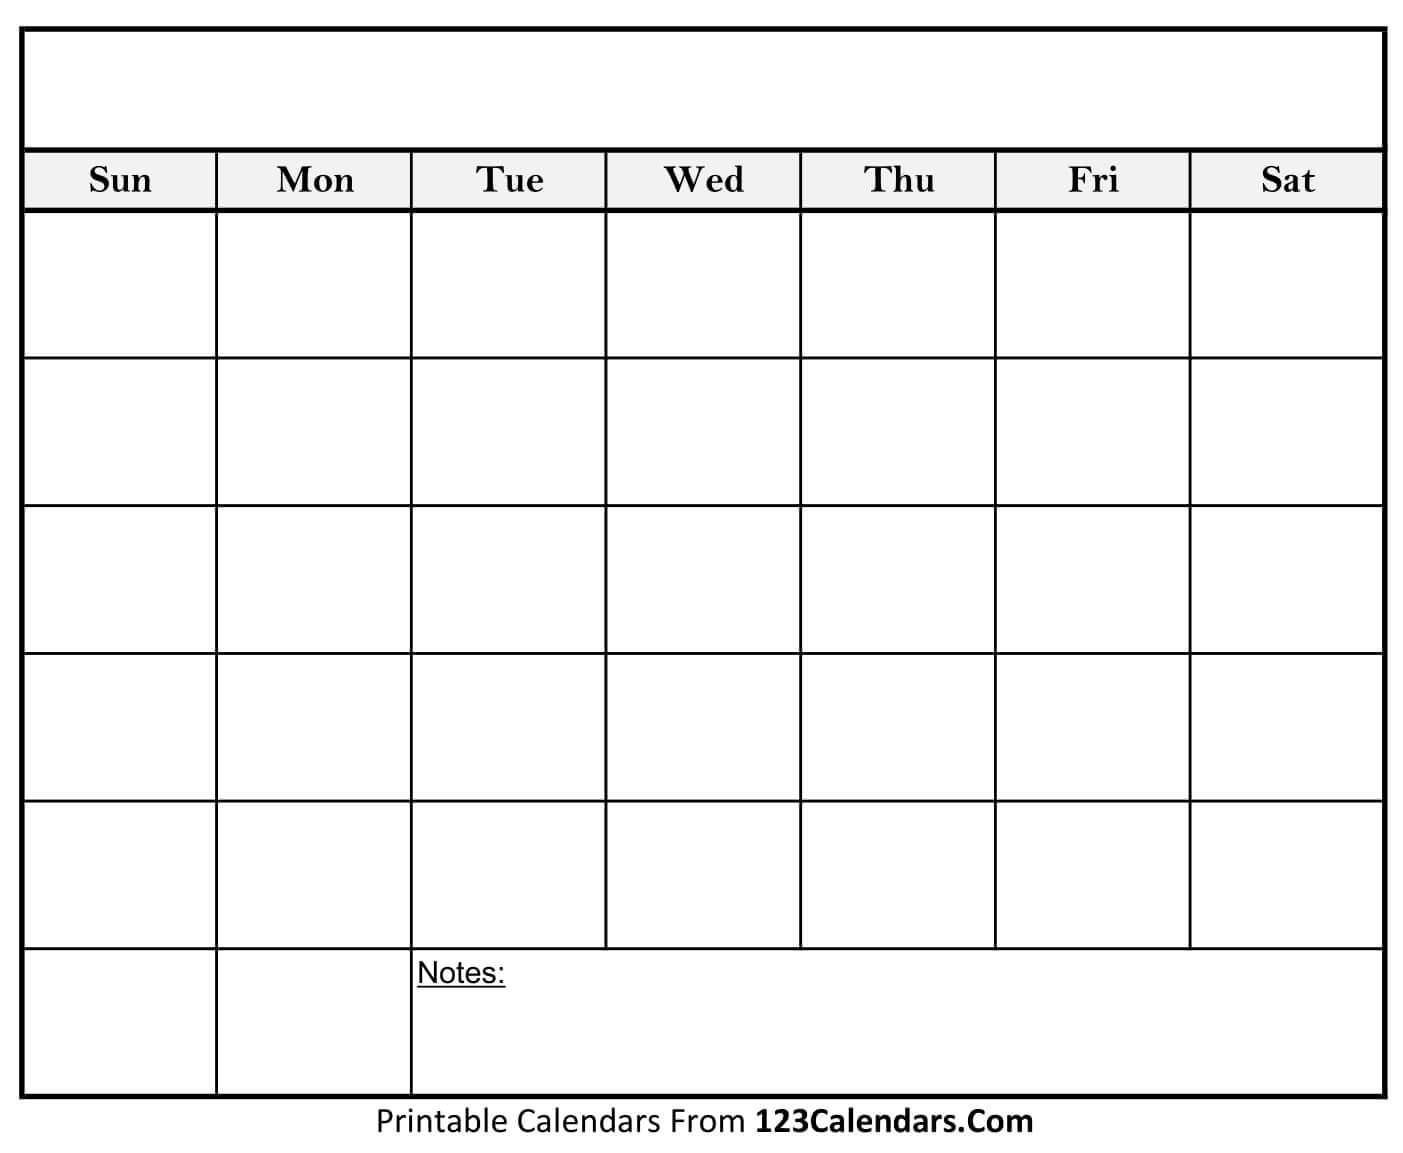 Free Printable Blank Calendar | 123Calendars-Blank Calendar Page Printable